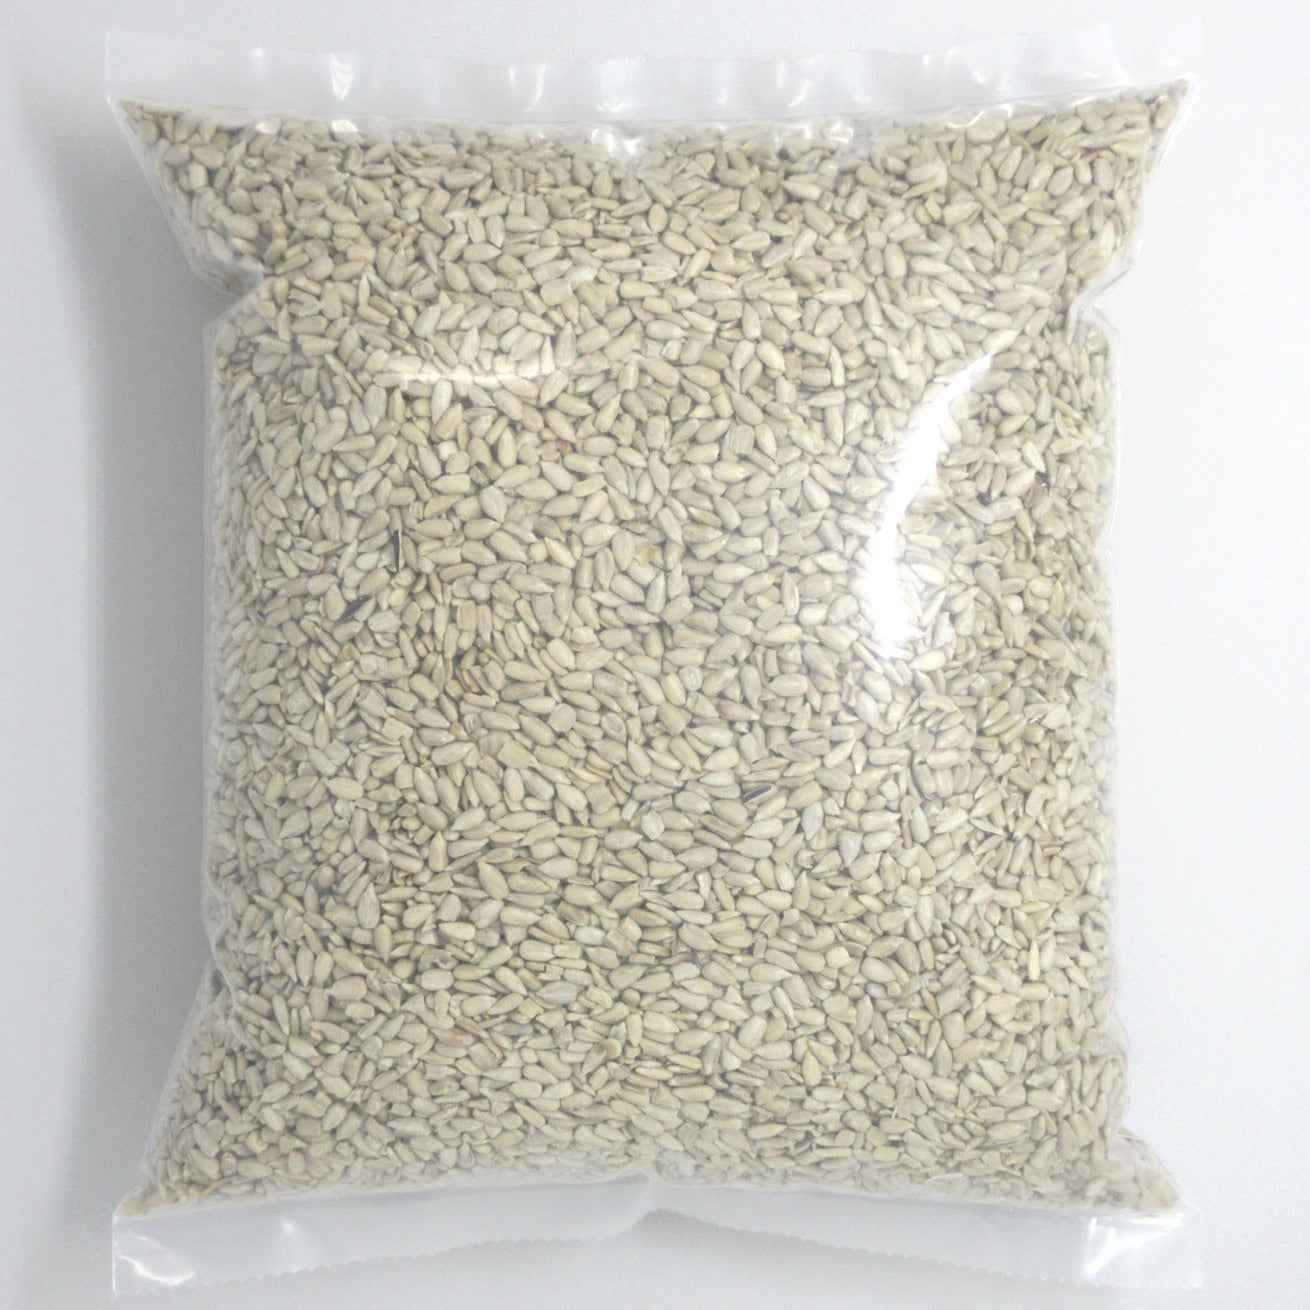 Flour Barrel product image - Sunflower Seeds